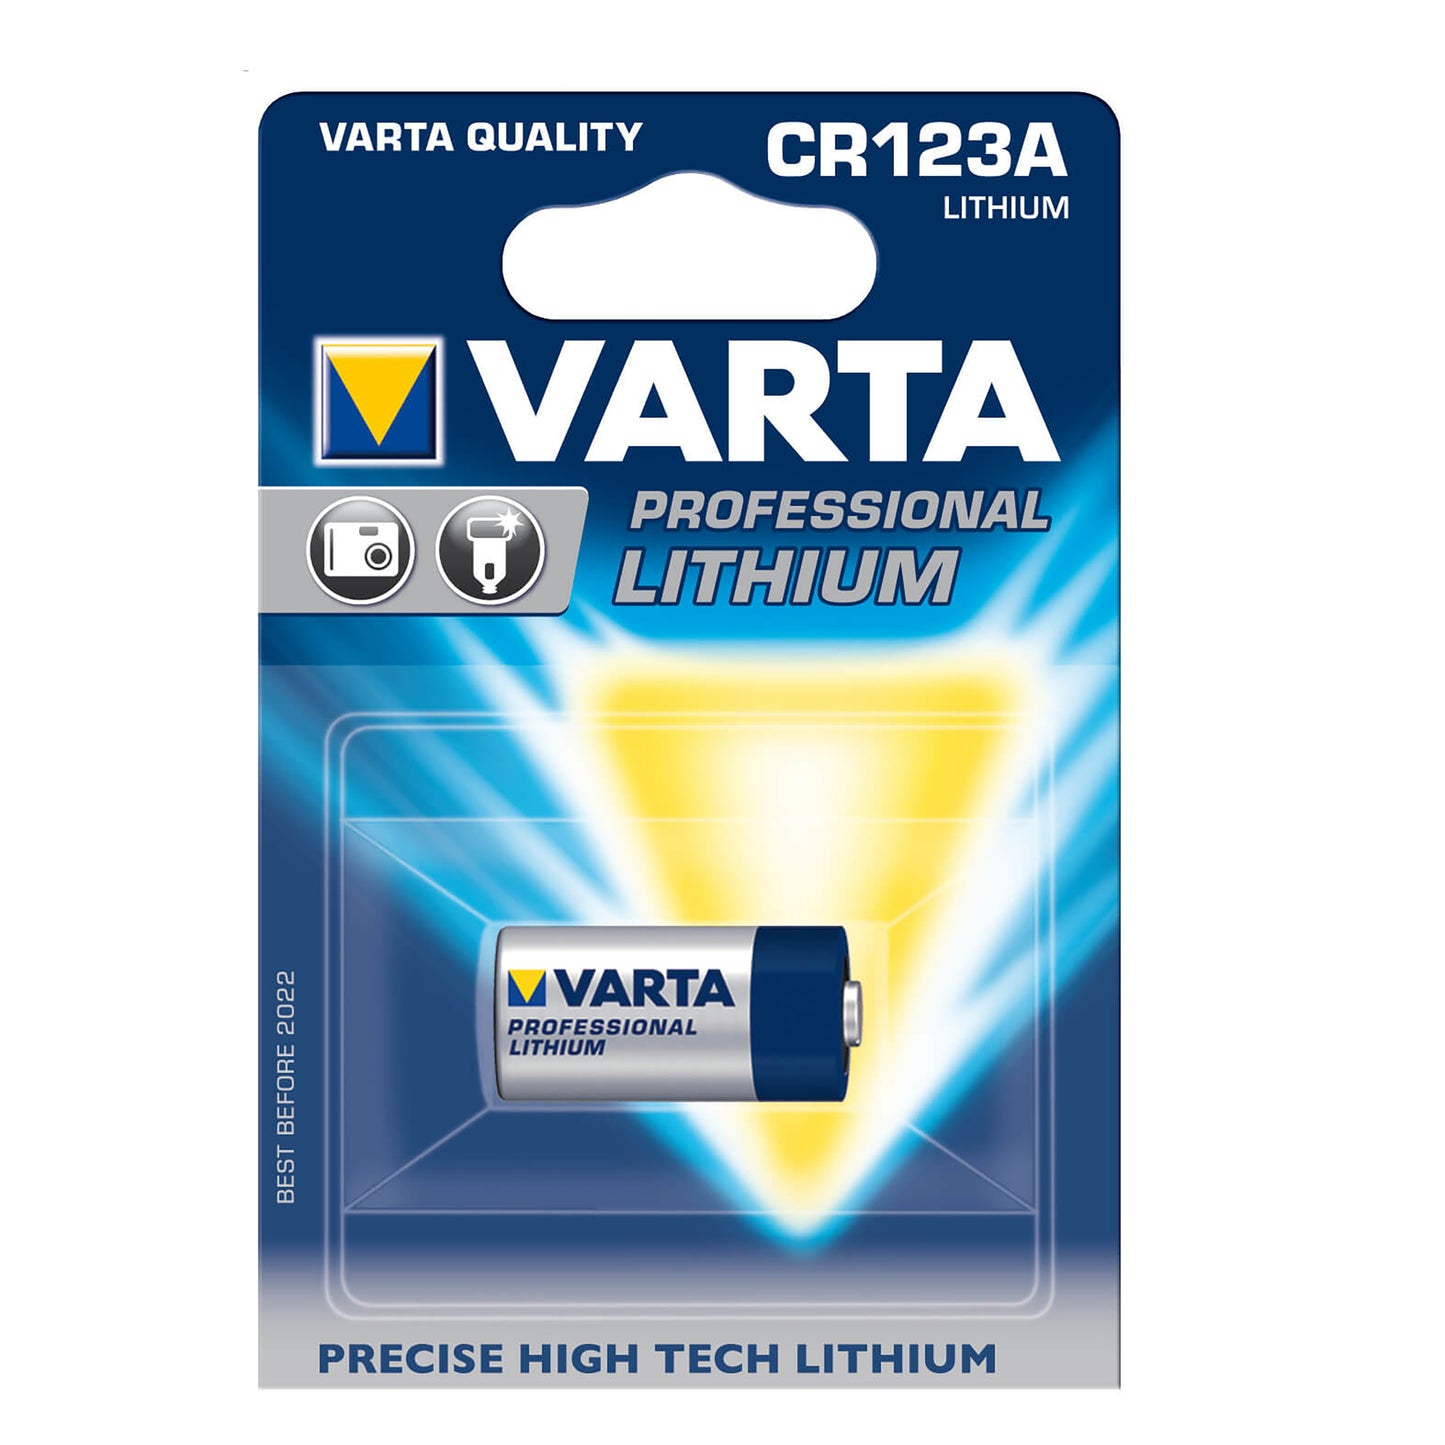 VAR-CR123A-1 - литиевая батарейка Varta CR123A, 3 В (1 шт. в блистере)